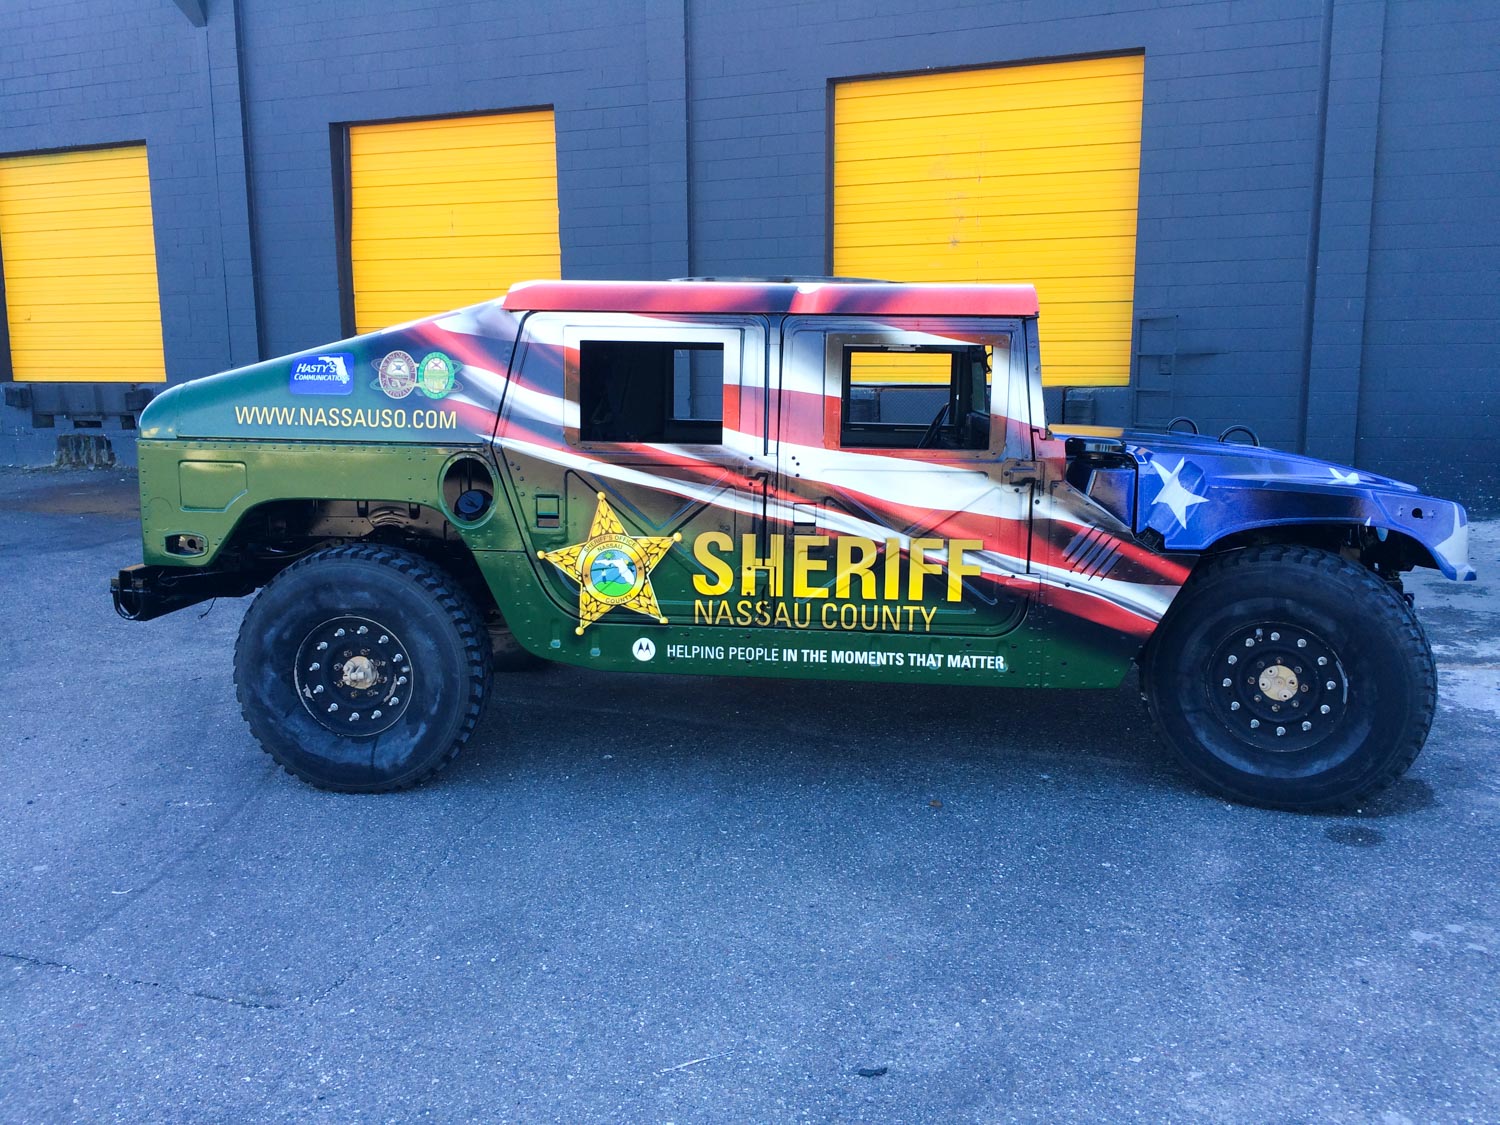 Nassau Sheriff Vehicle Wrap 